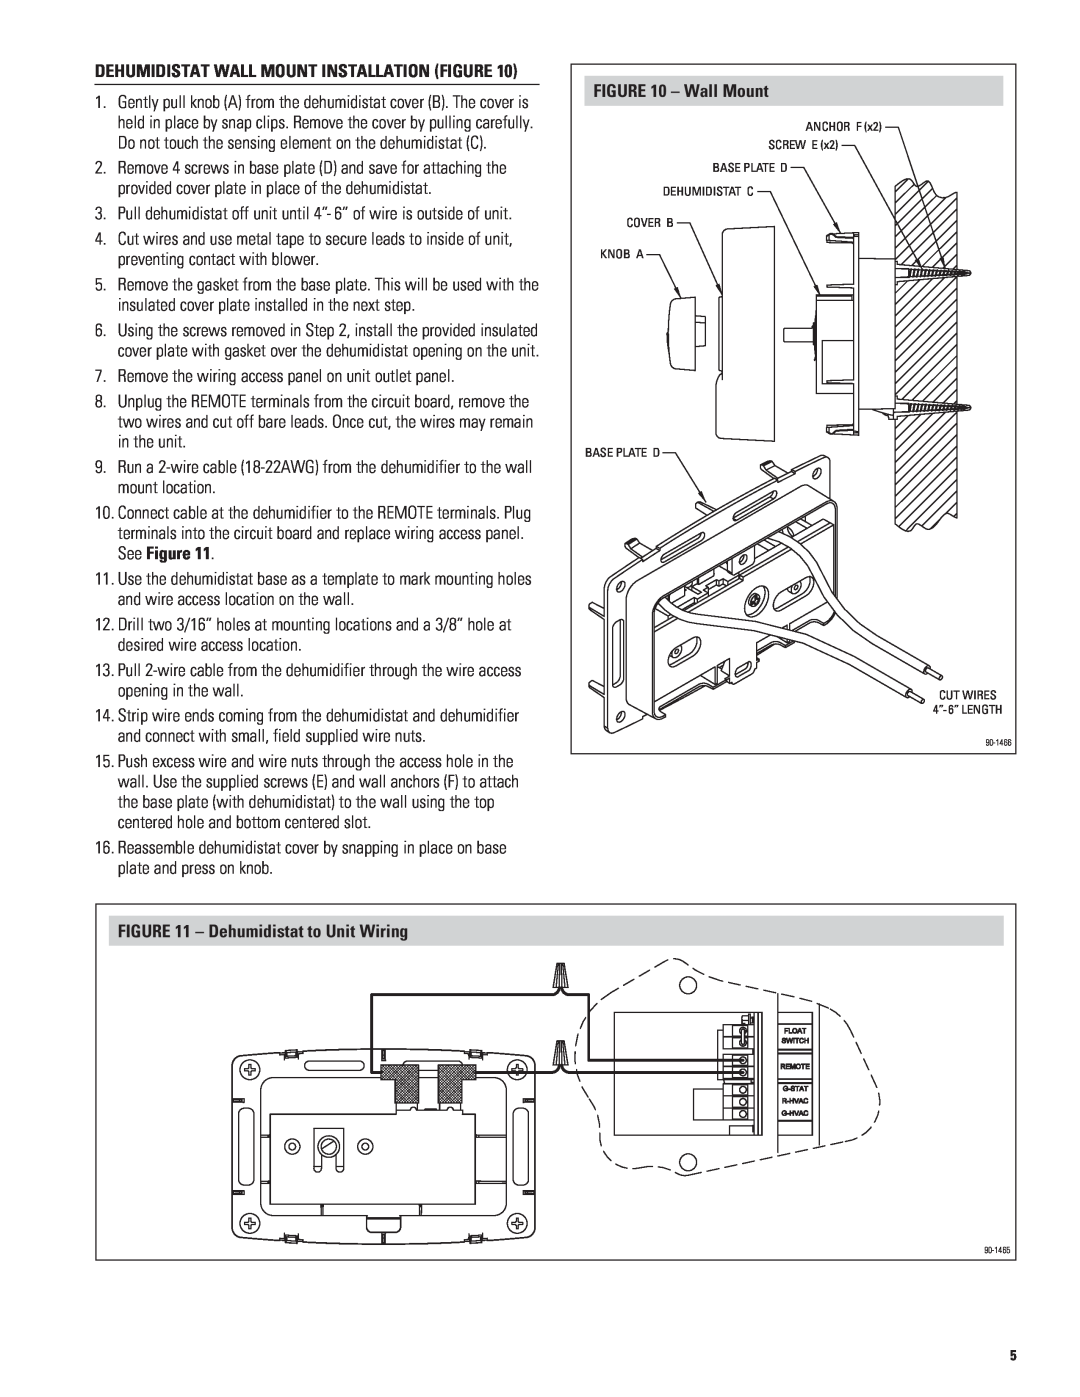 Aprilaire 1730A specifications DEHUMIDISTAT Wall Mount Installation Figure, Dehumidistat to Unit Wiring 